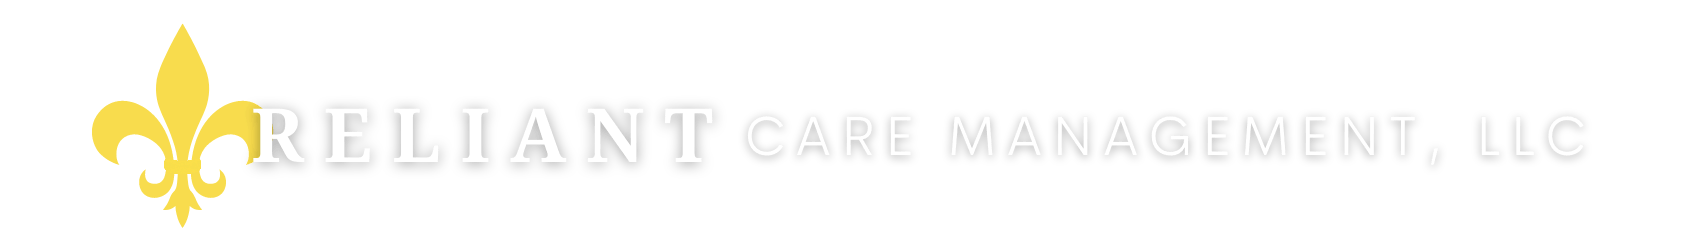 Reliant Care Management, LLC Logo